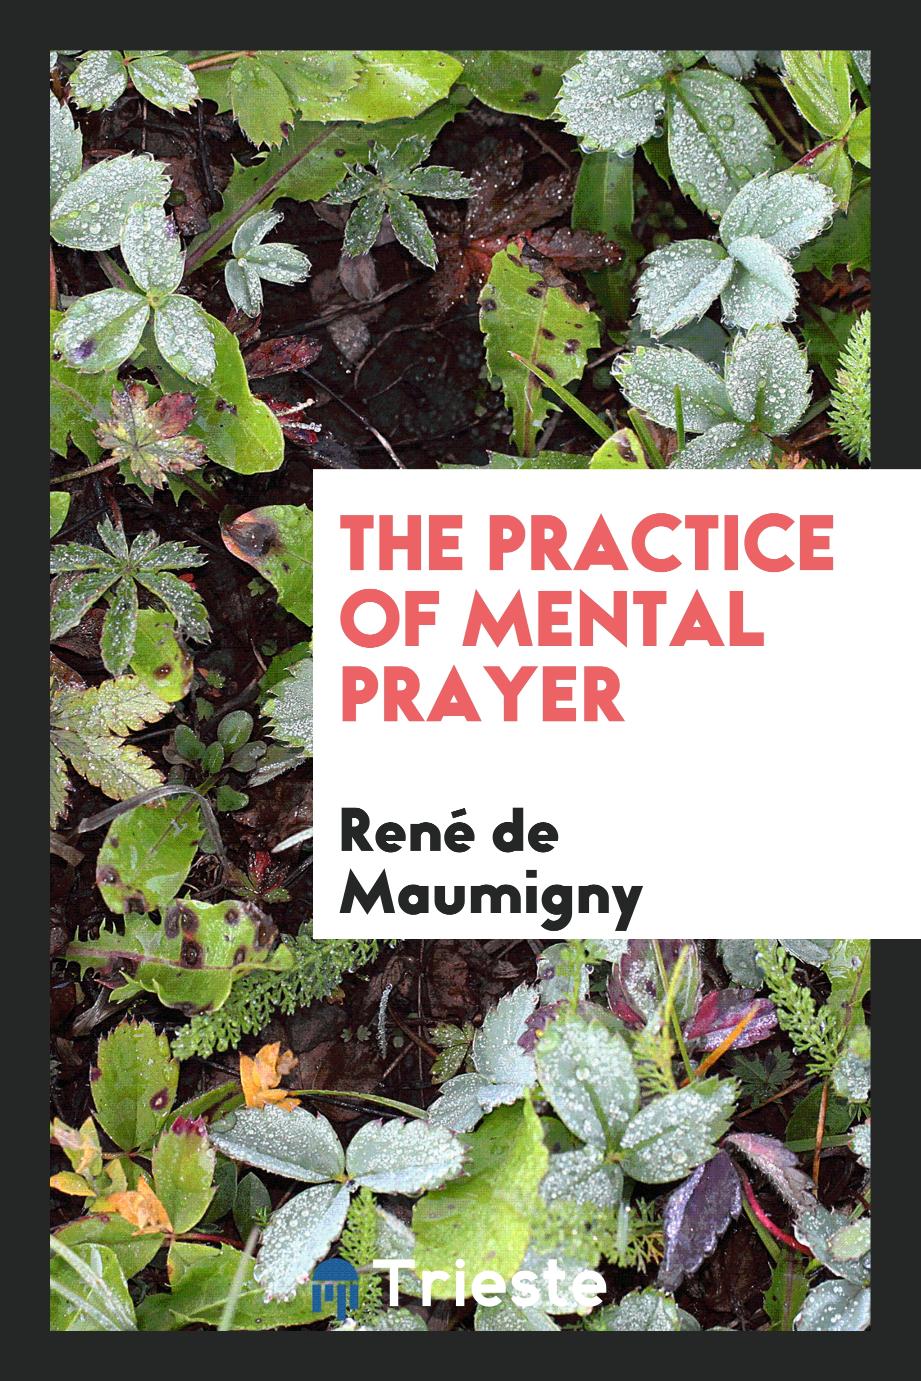 The Practice of Mental Prayer